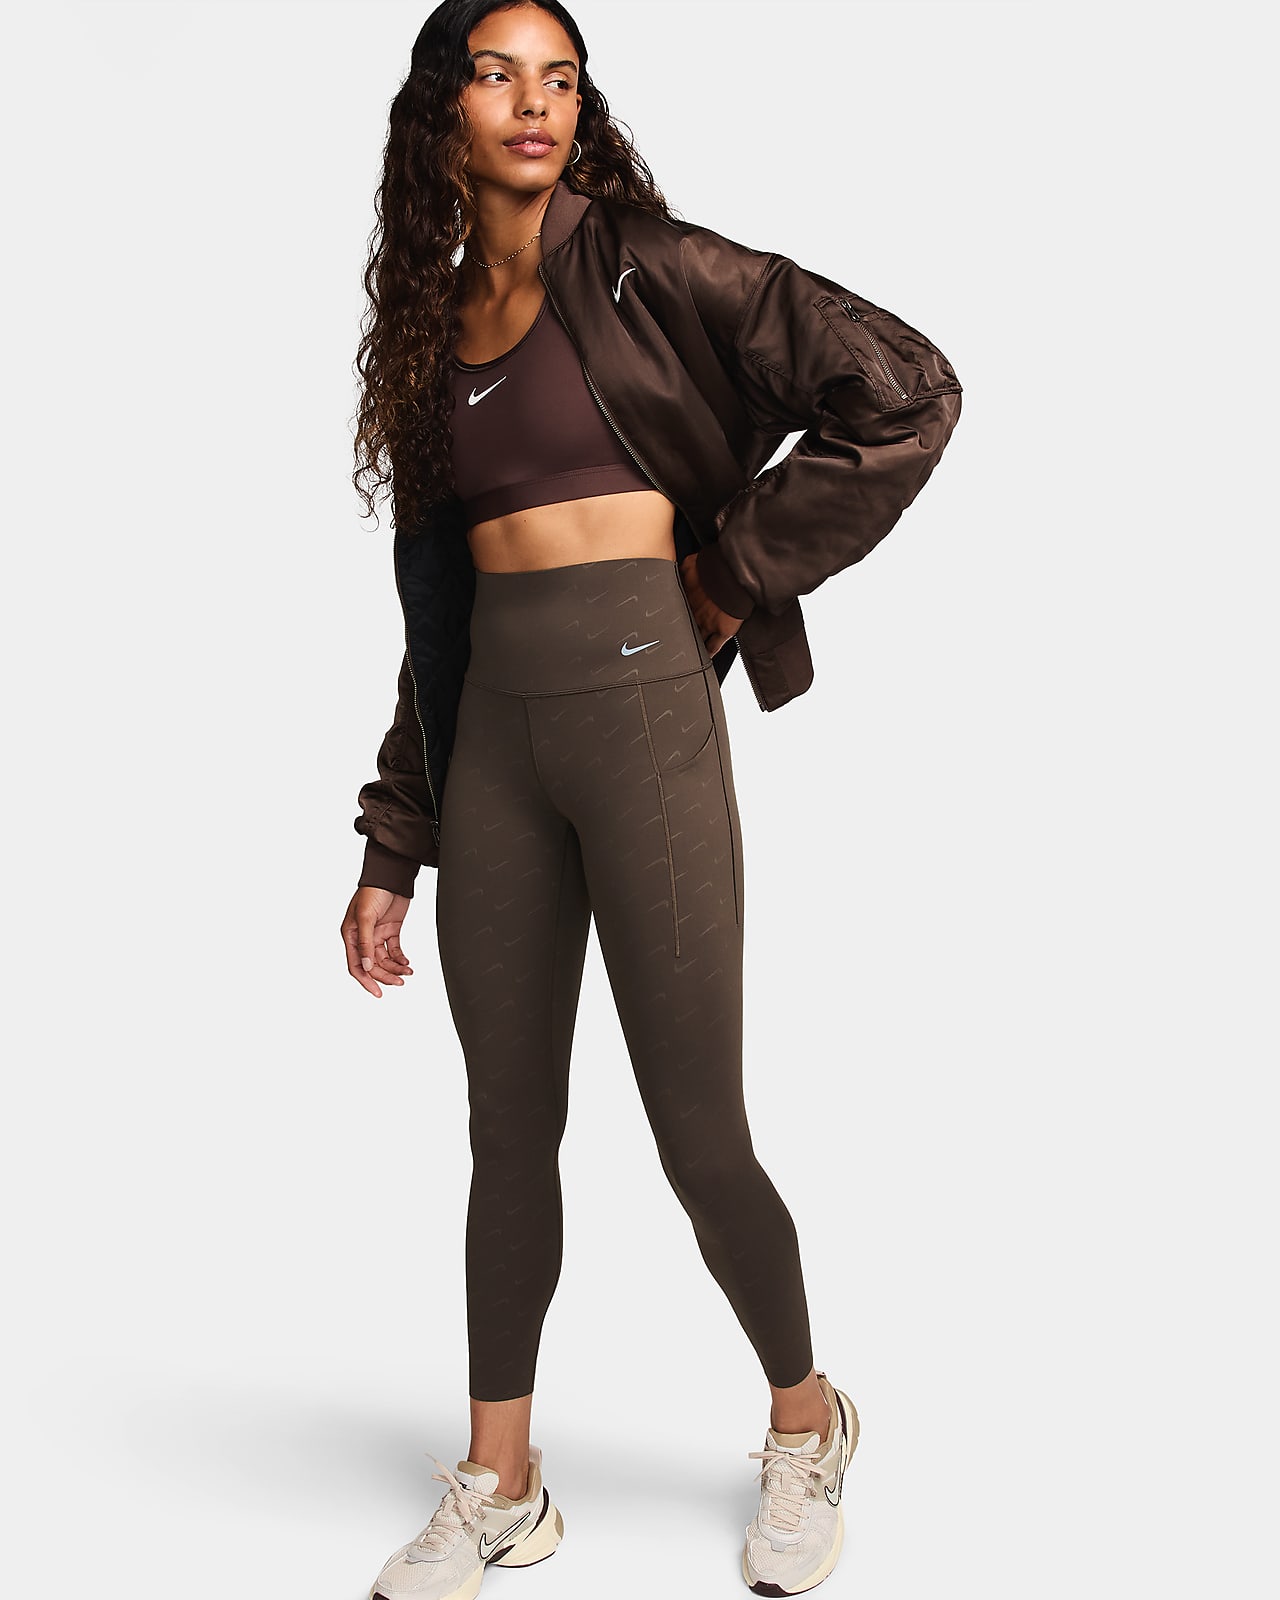 Nike Women's Dri-Fit Universa High Rise Full Length Legging from